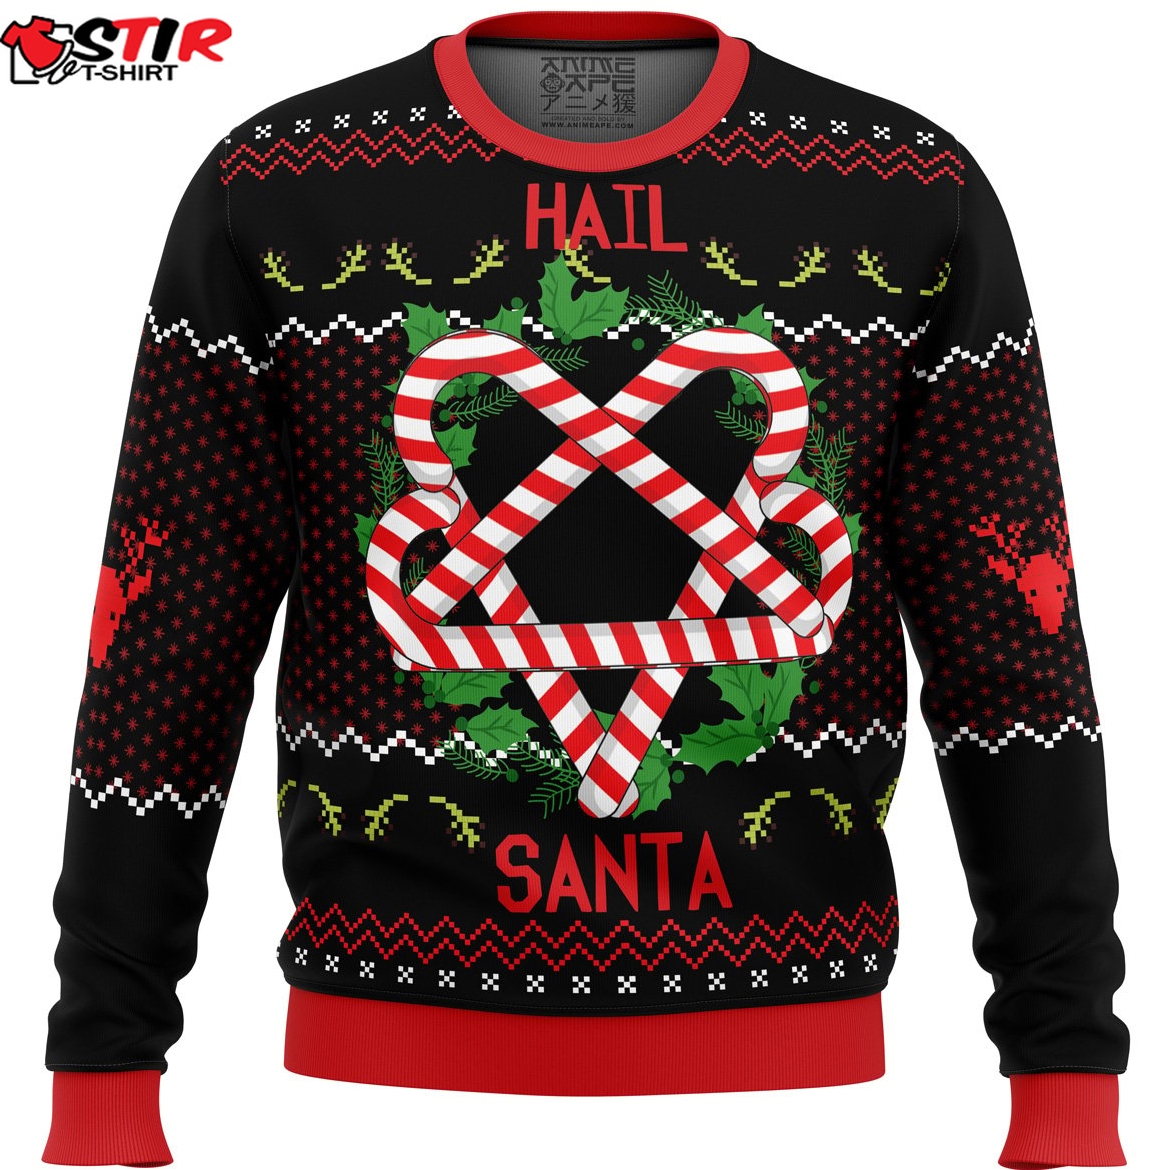 Hail Santa Ugly Christmas Sweater Stirtshirt